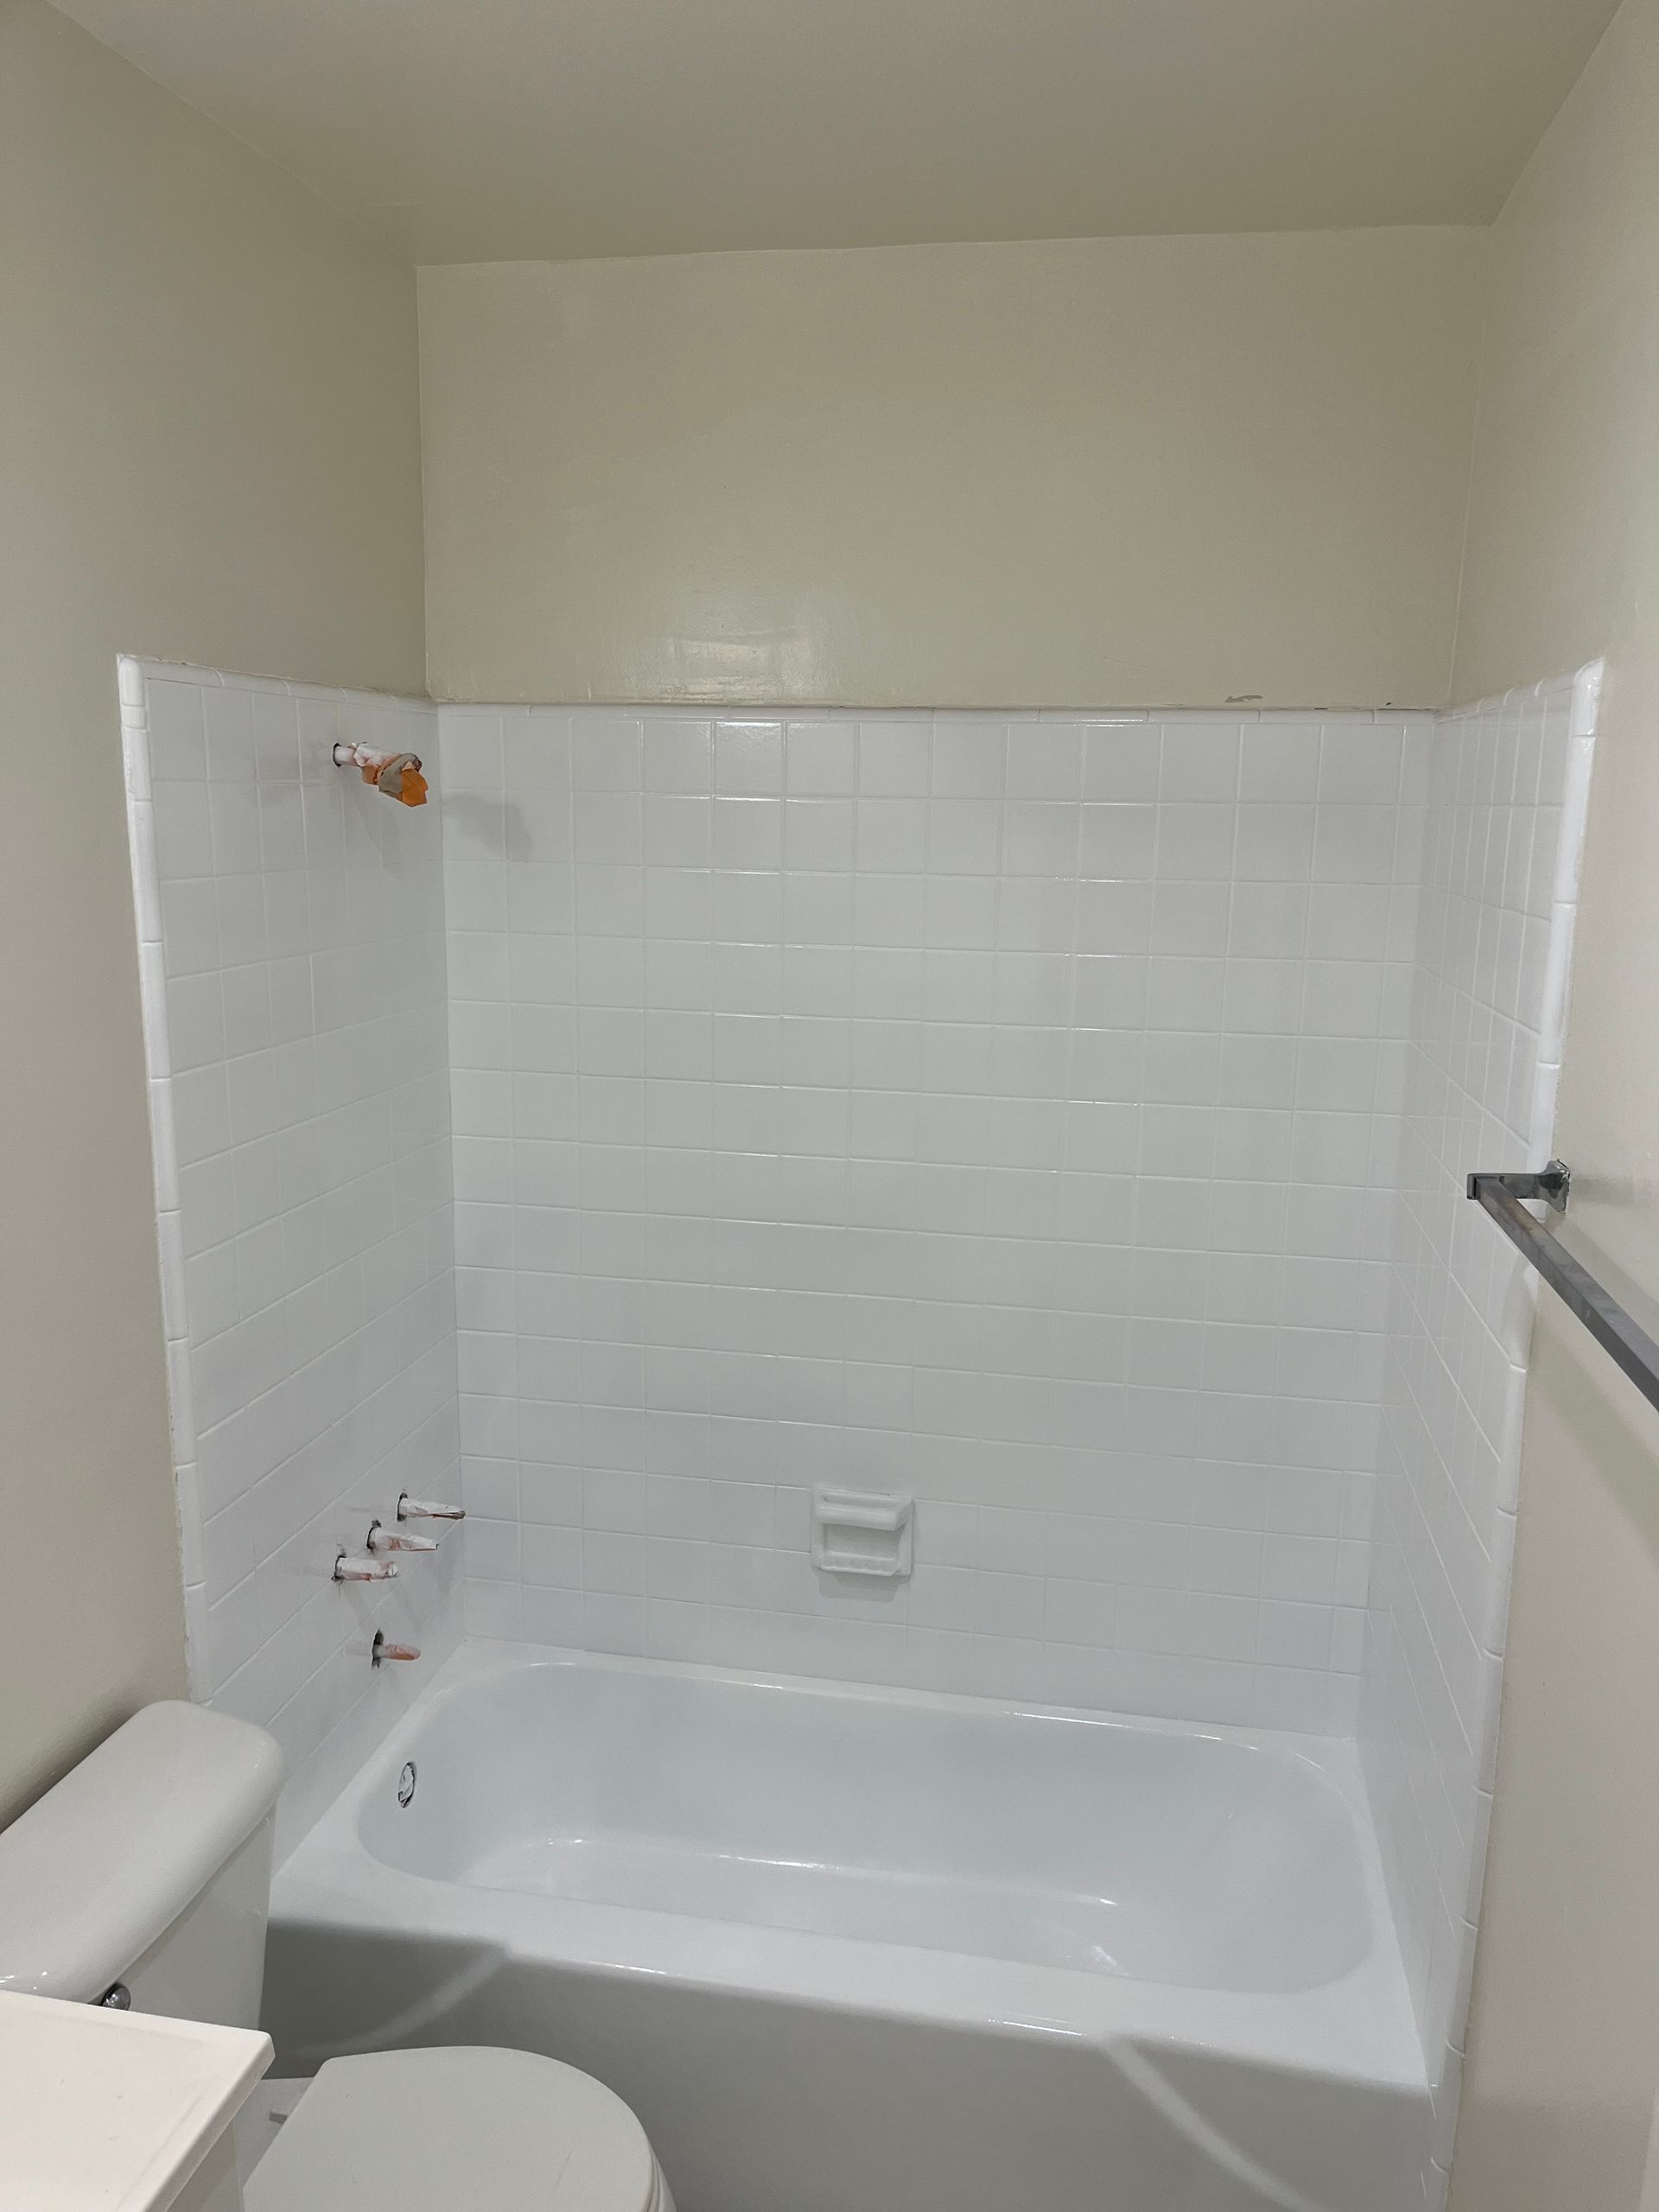 A bathroom with a bathtub , toilet and shower.